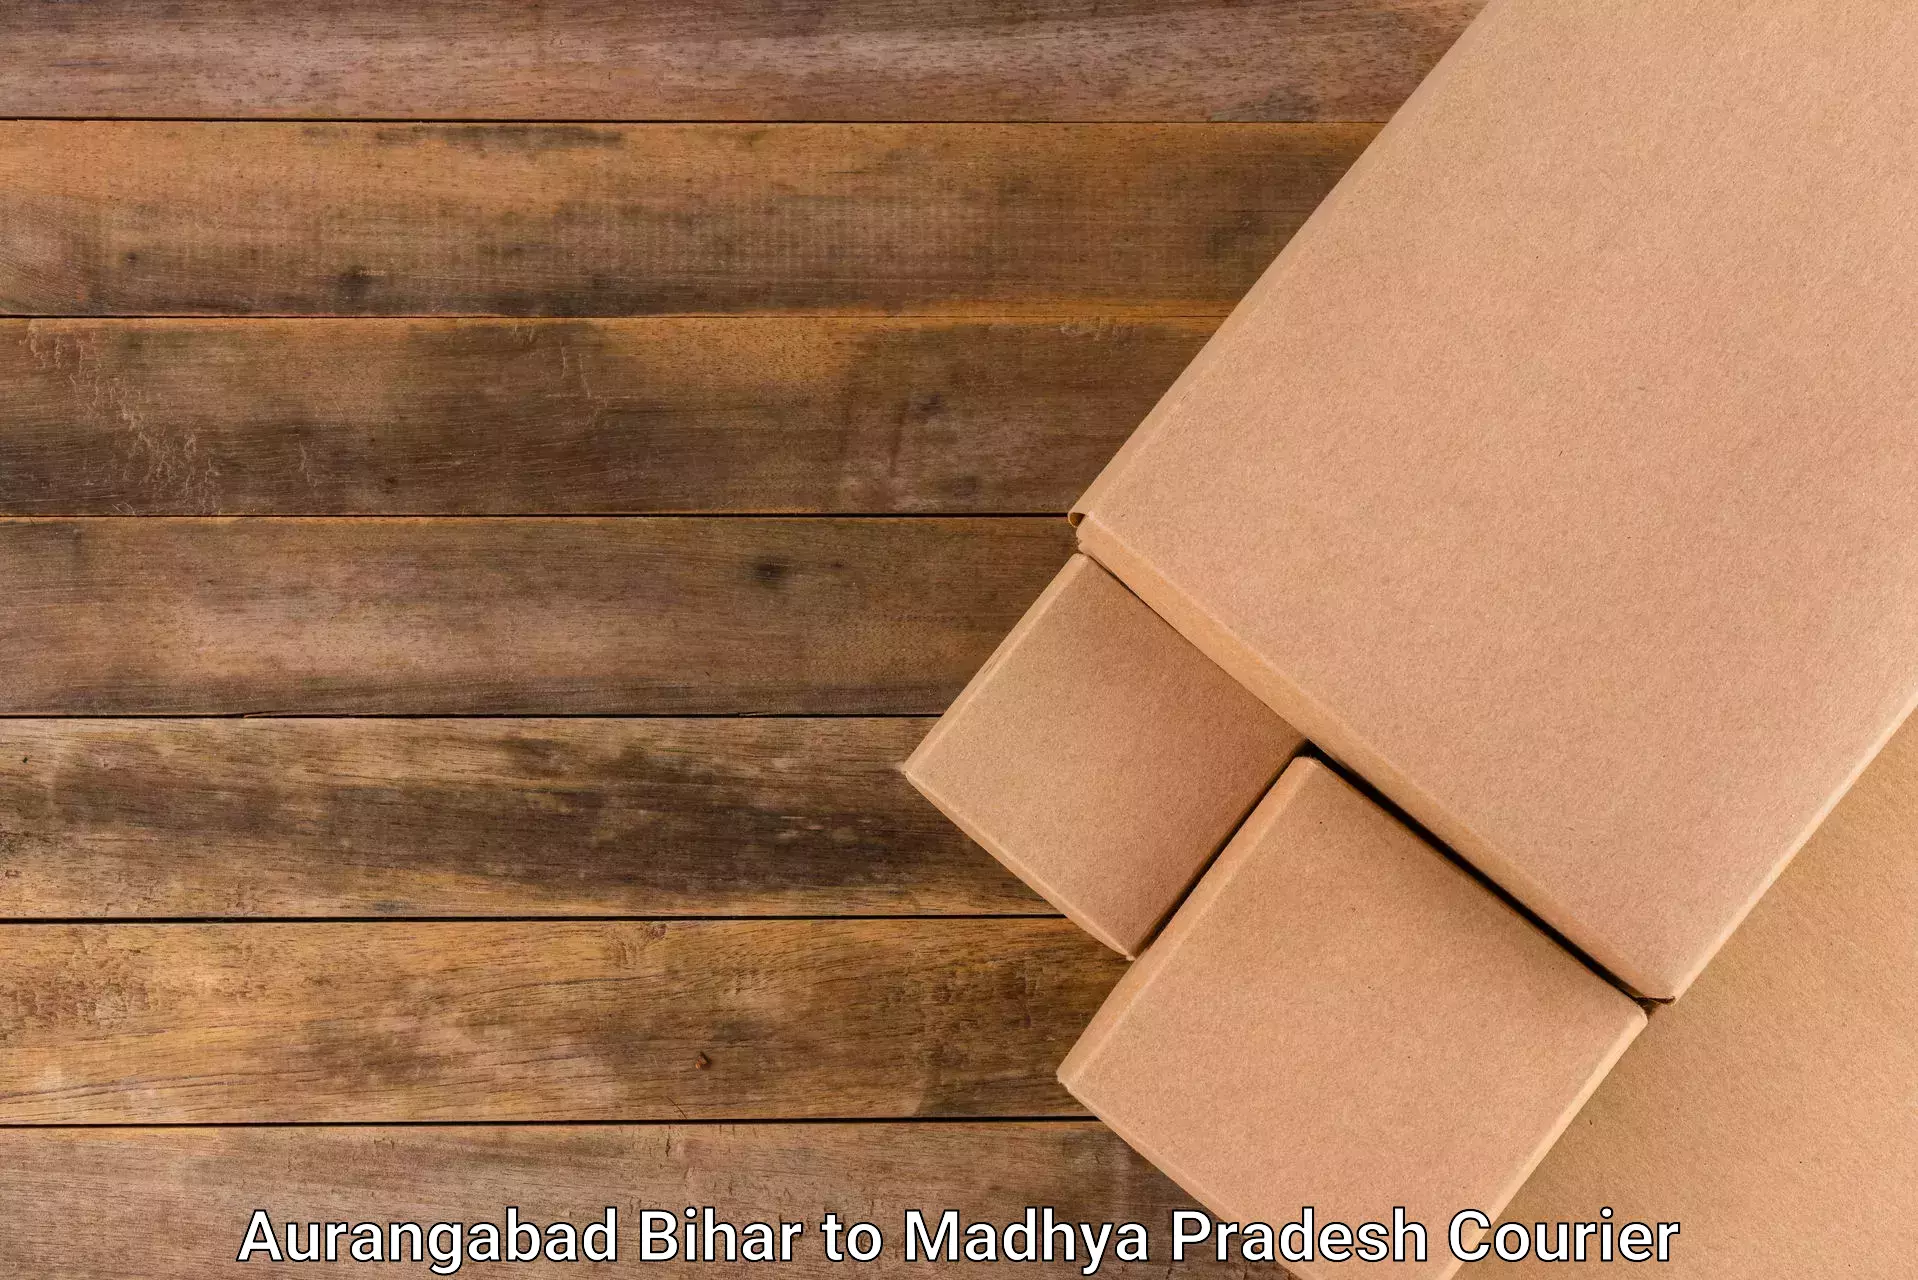 User-friendly courier app Aurangabad Bihar to Umaria